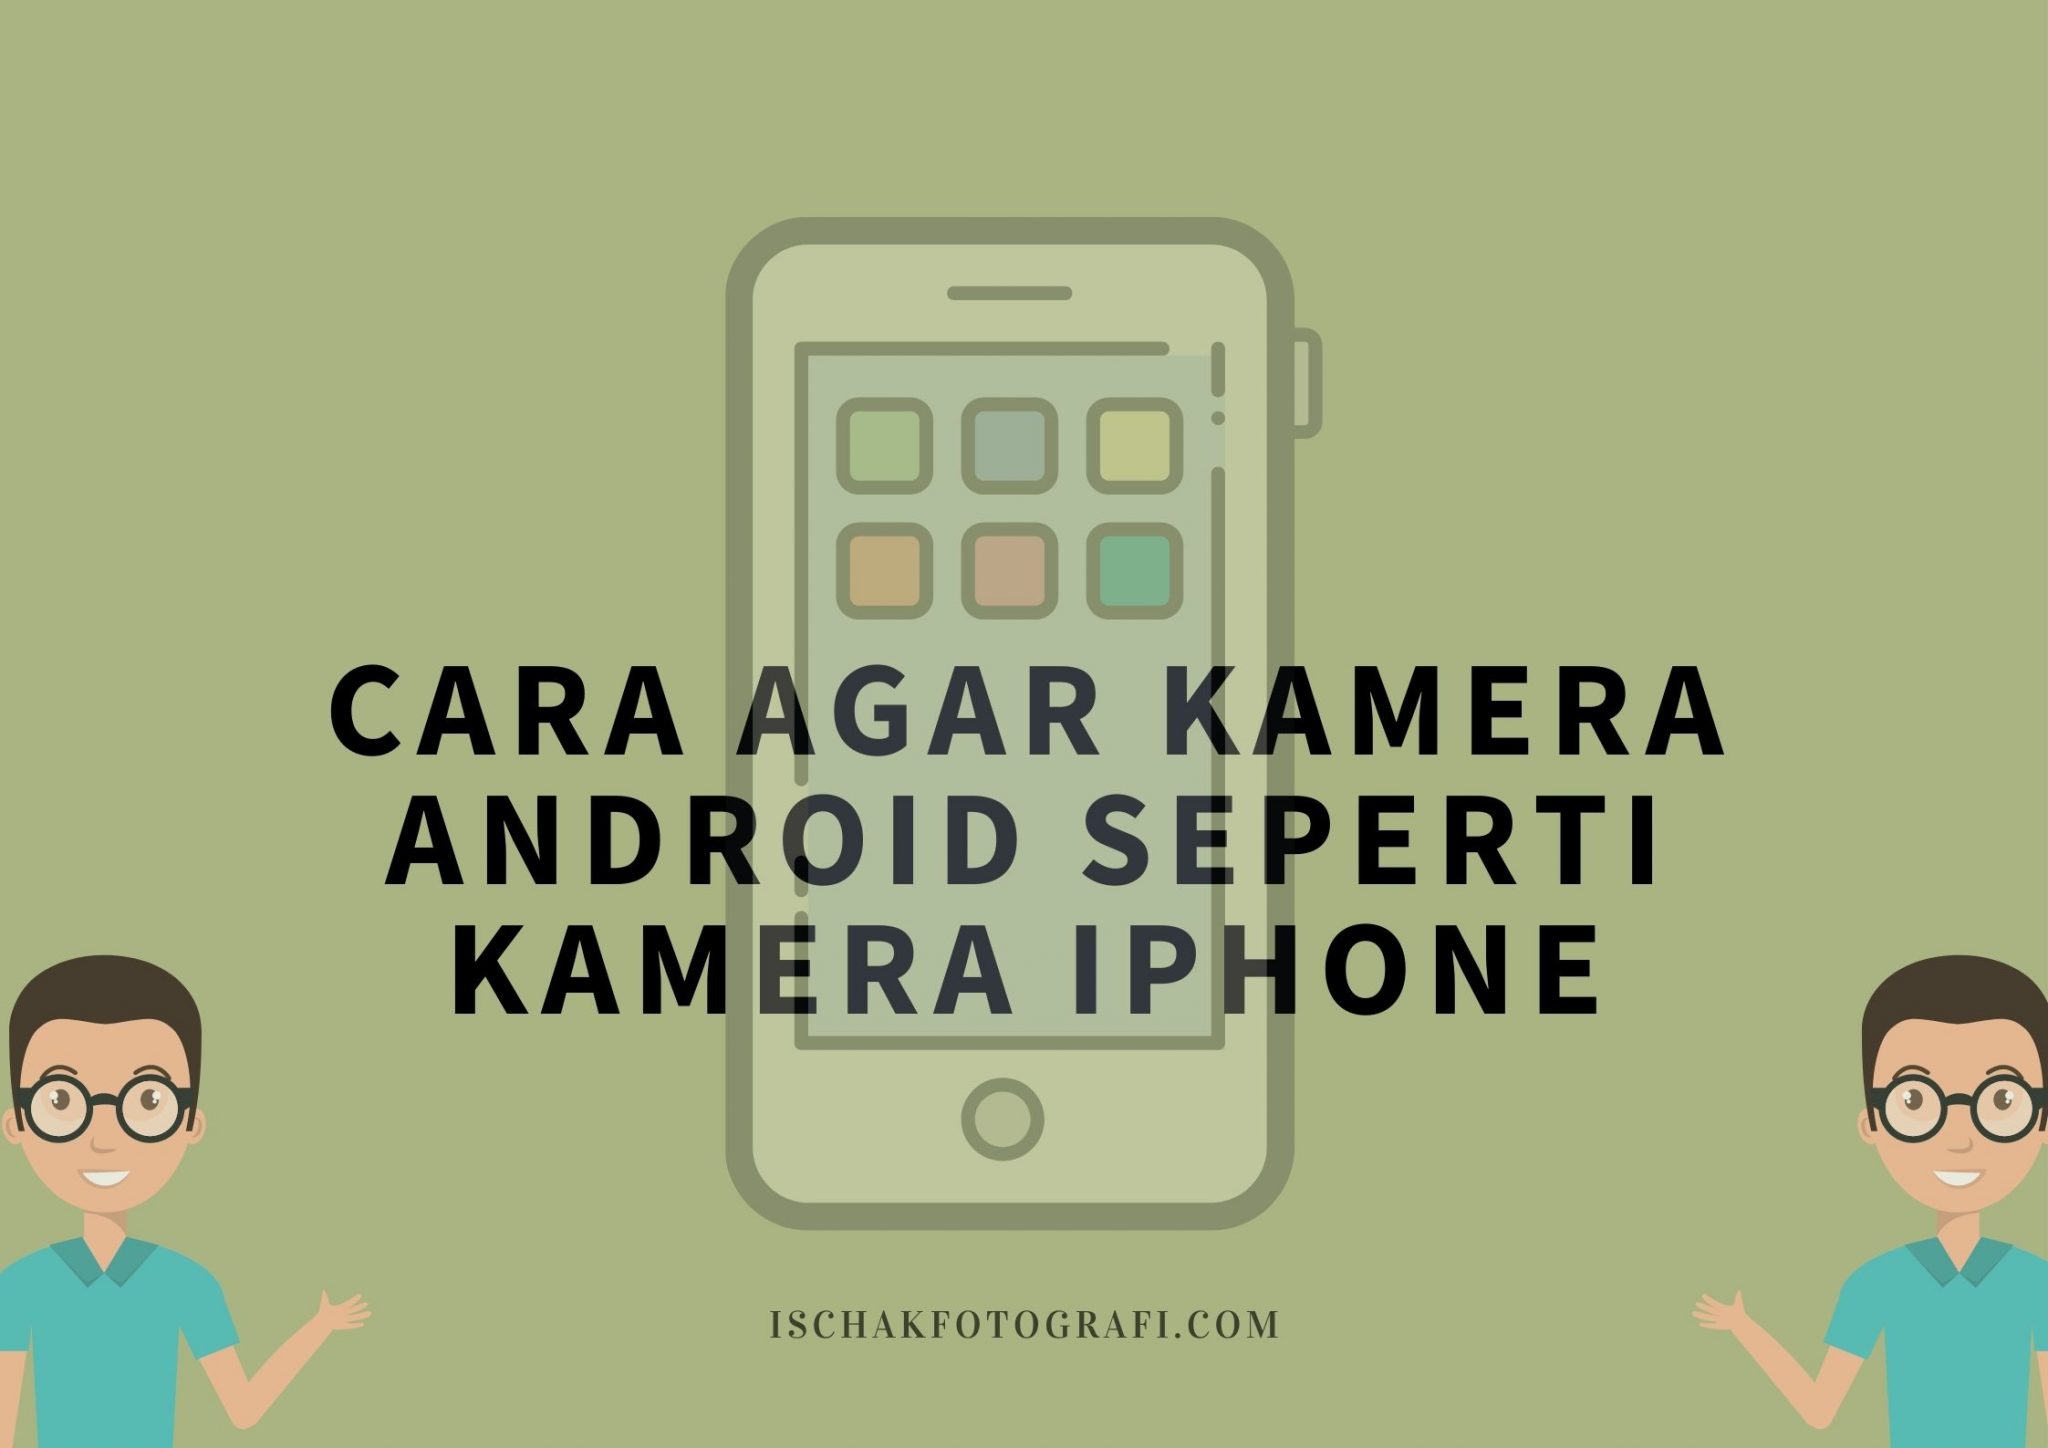 Cara Agar Kamera Android Seperti Kamera Iphone - Ischak Fotografi